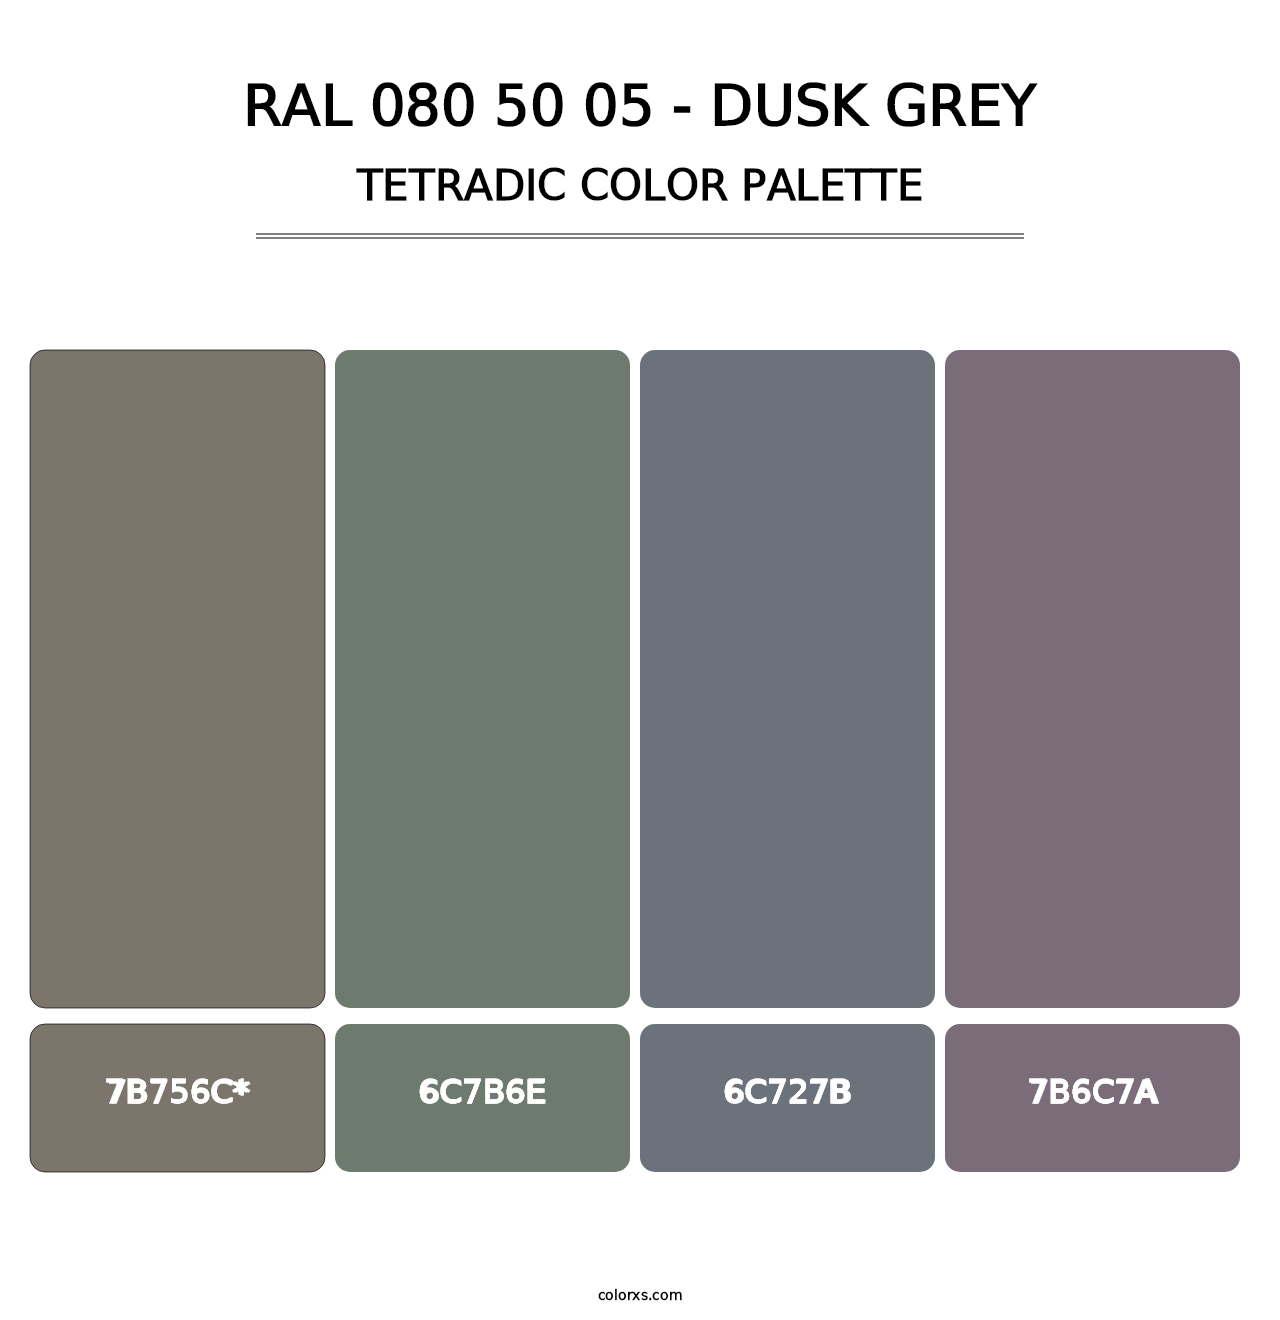 RAL 080 50 05 - Dusk Grey - Tetradic Color Palette